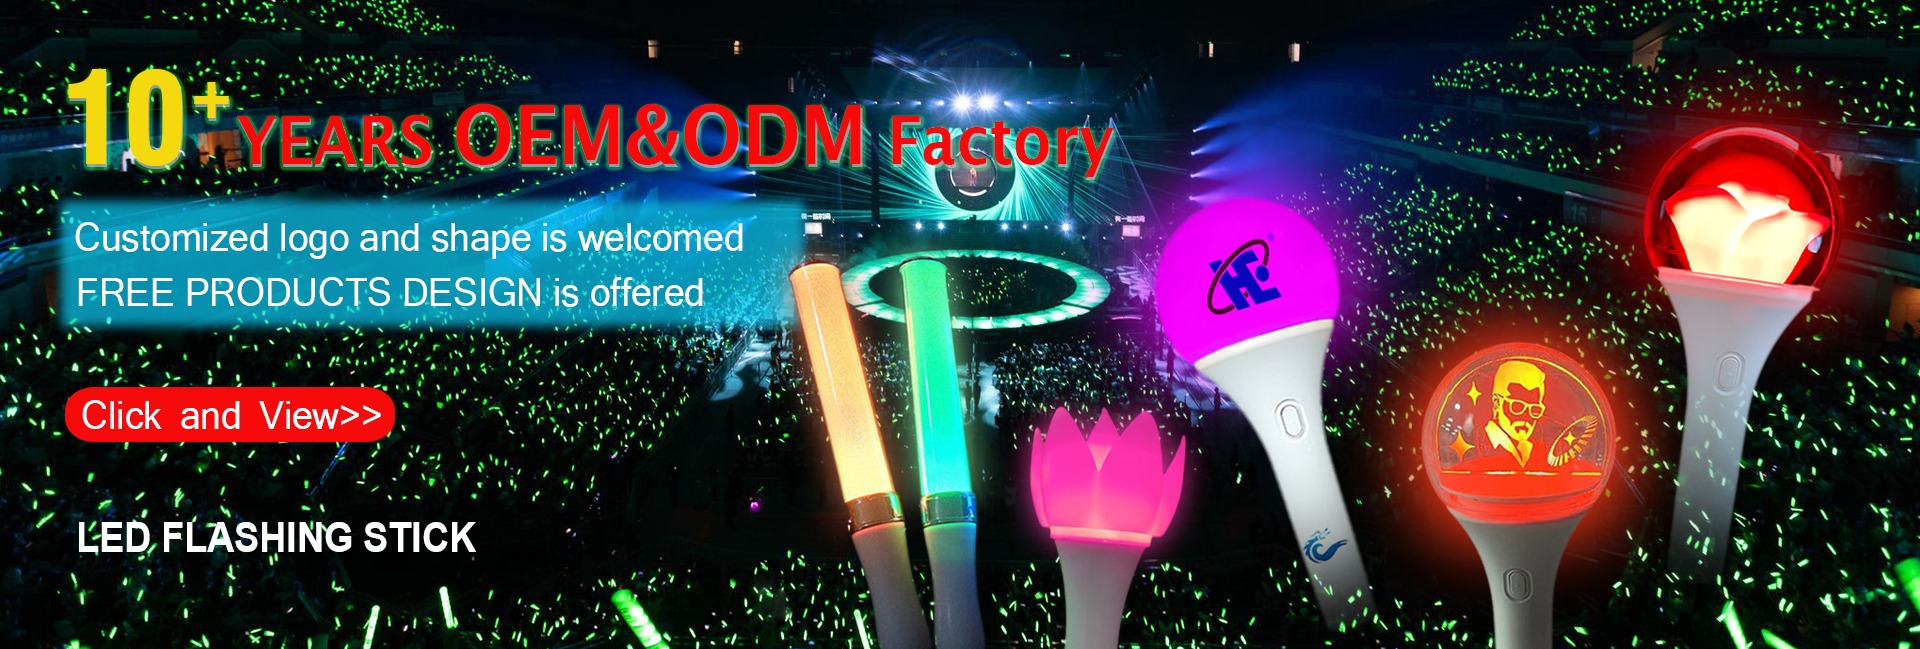 https://www.zhongdamold.com/oem-custom-cheering-concert-light-stick-engraved-3d-logo-acryl-led-stick-product/